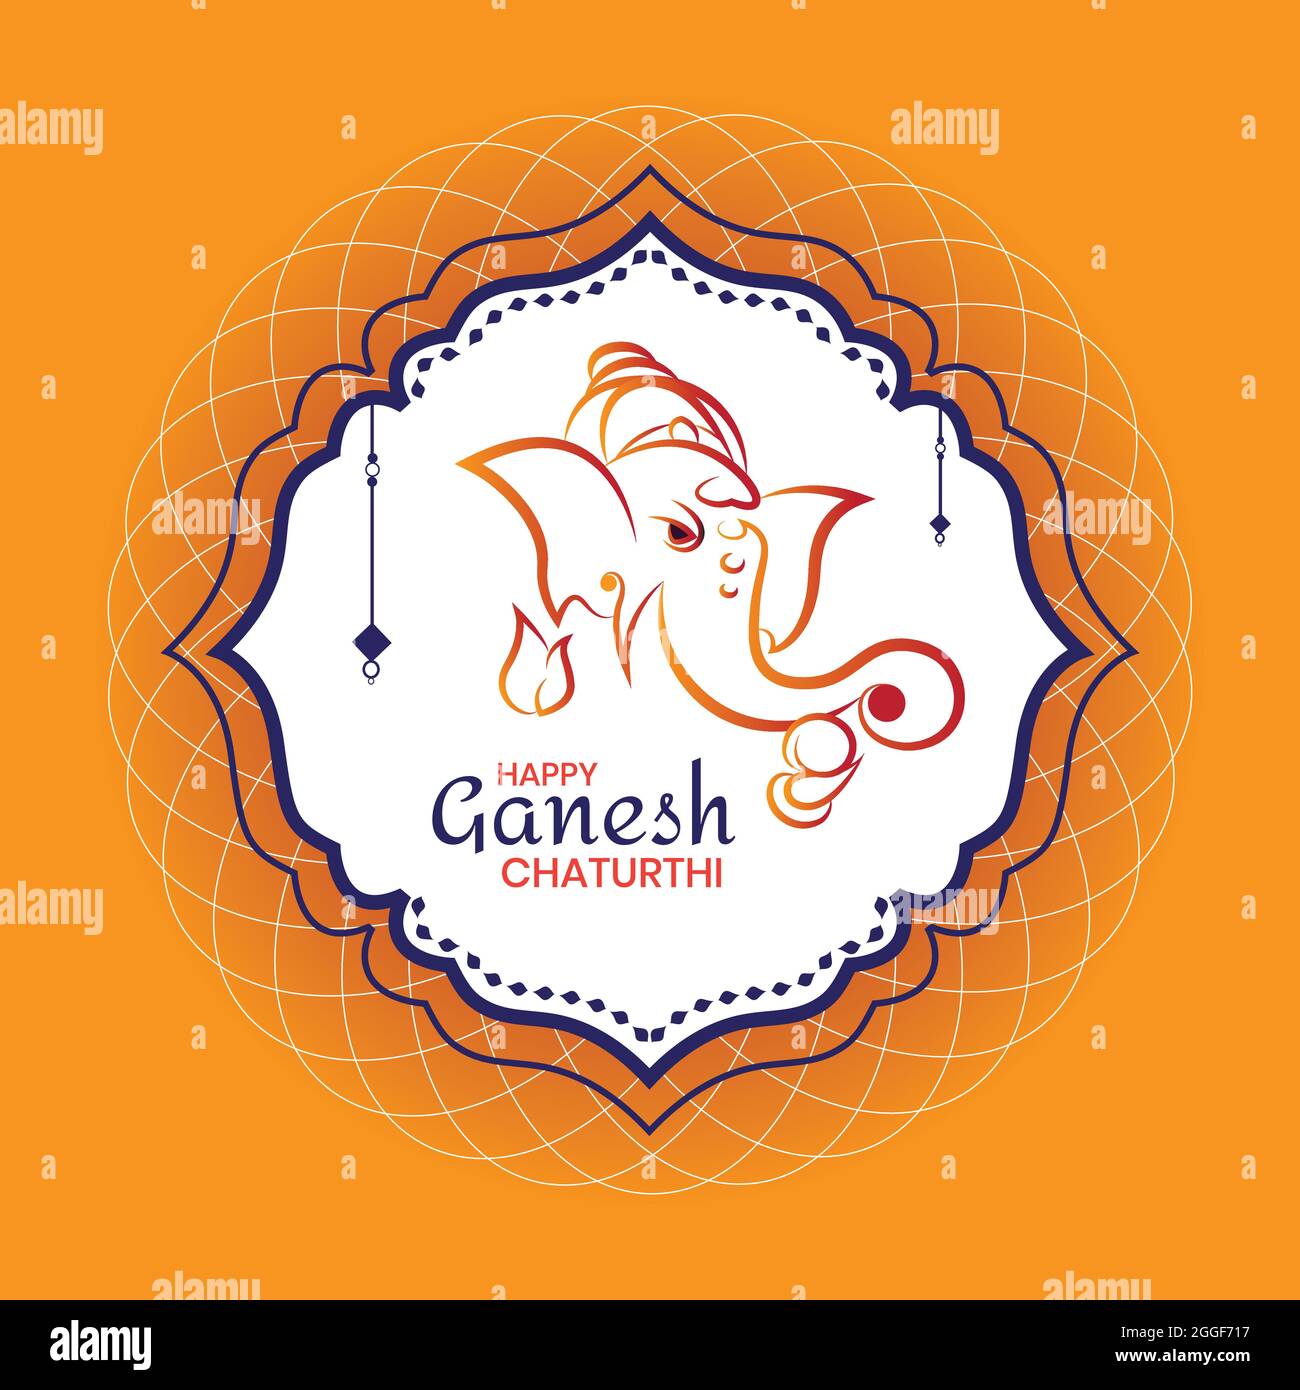 Poster of Happy Ganesh Chaturthi. Outline of God Ganesh's face. Orange color mandala background. Stock Vector